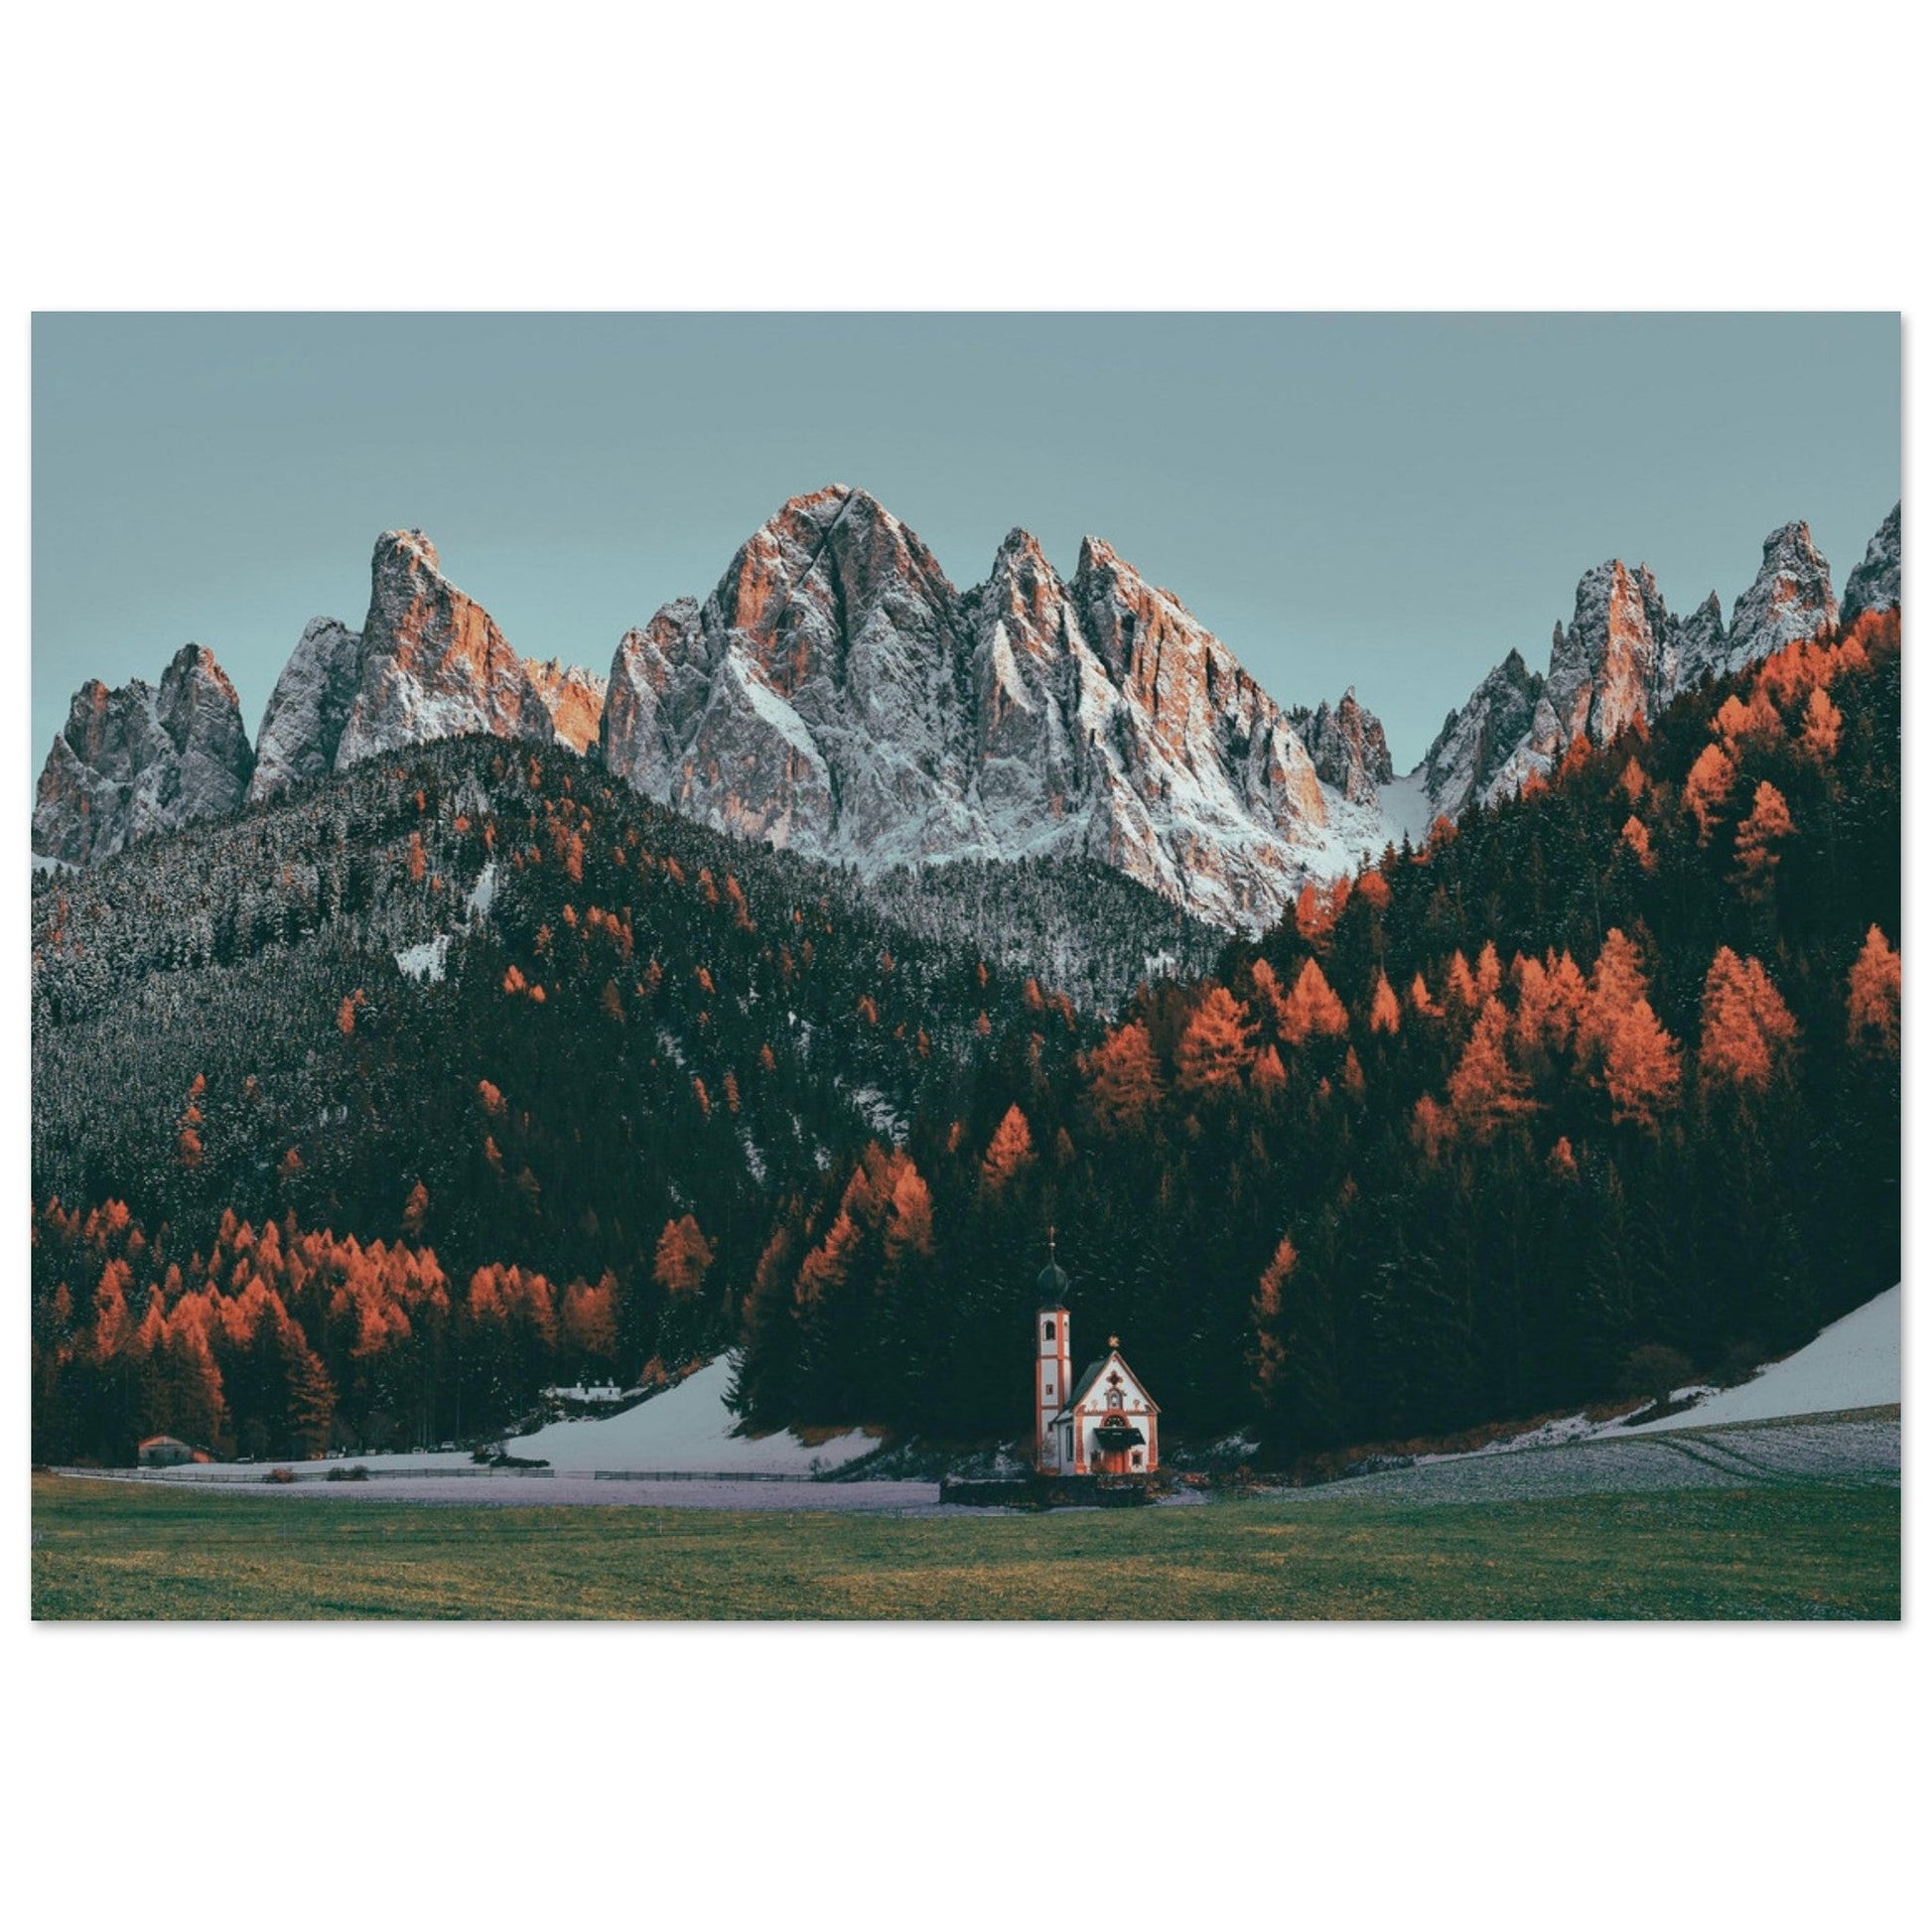 Vente Photo de Funes, Trentin-Haut-Adige, Italie #6 - Tableau photo paysage